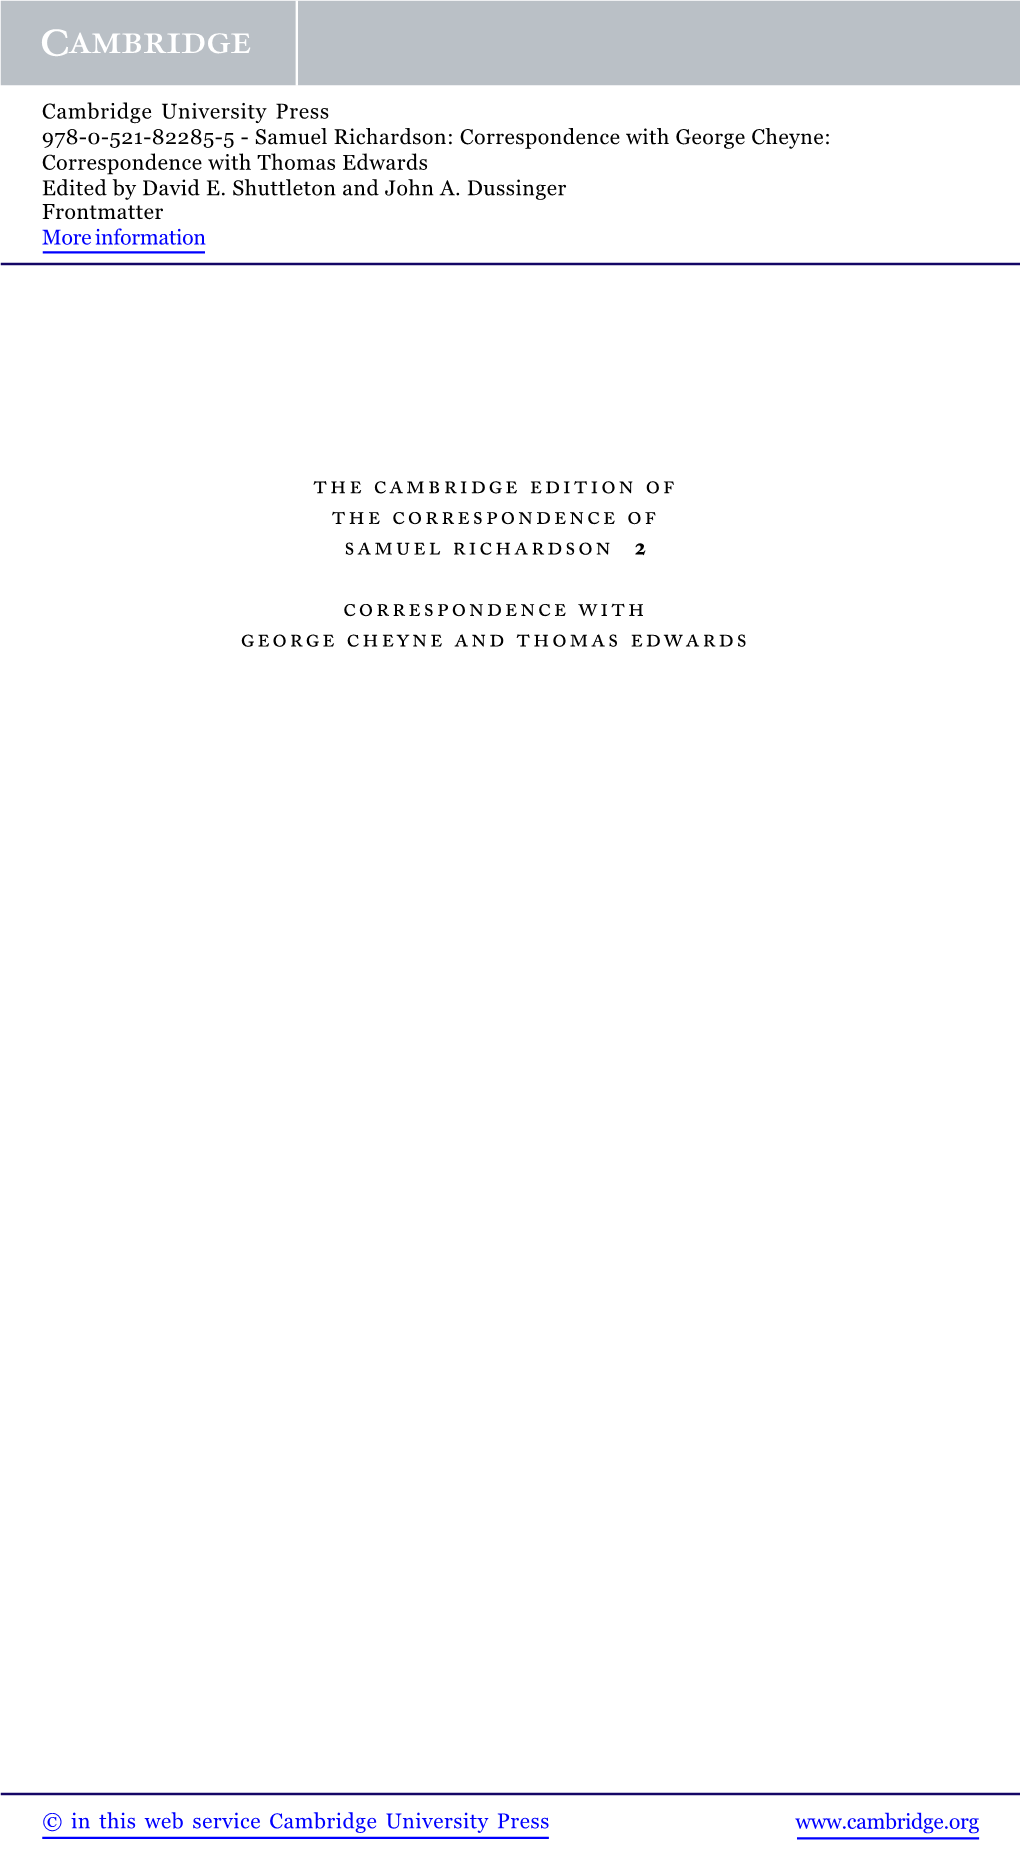 The Cambridge Edition of the Correspondence of Samuel Richardson 2 Correspondence with George Cheyne and Thomas Edwards